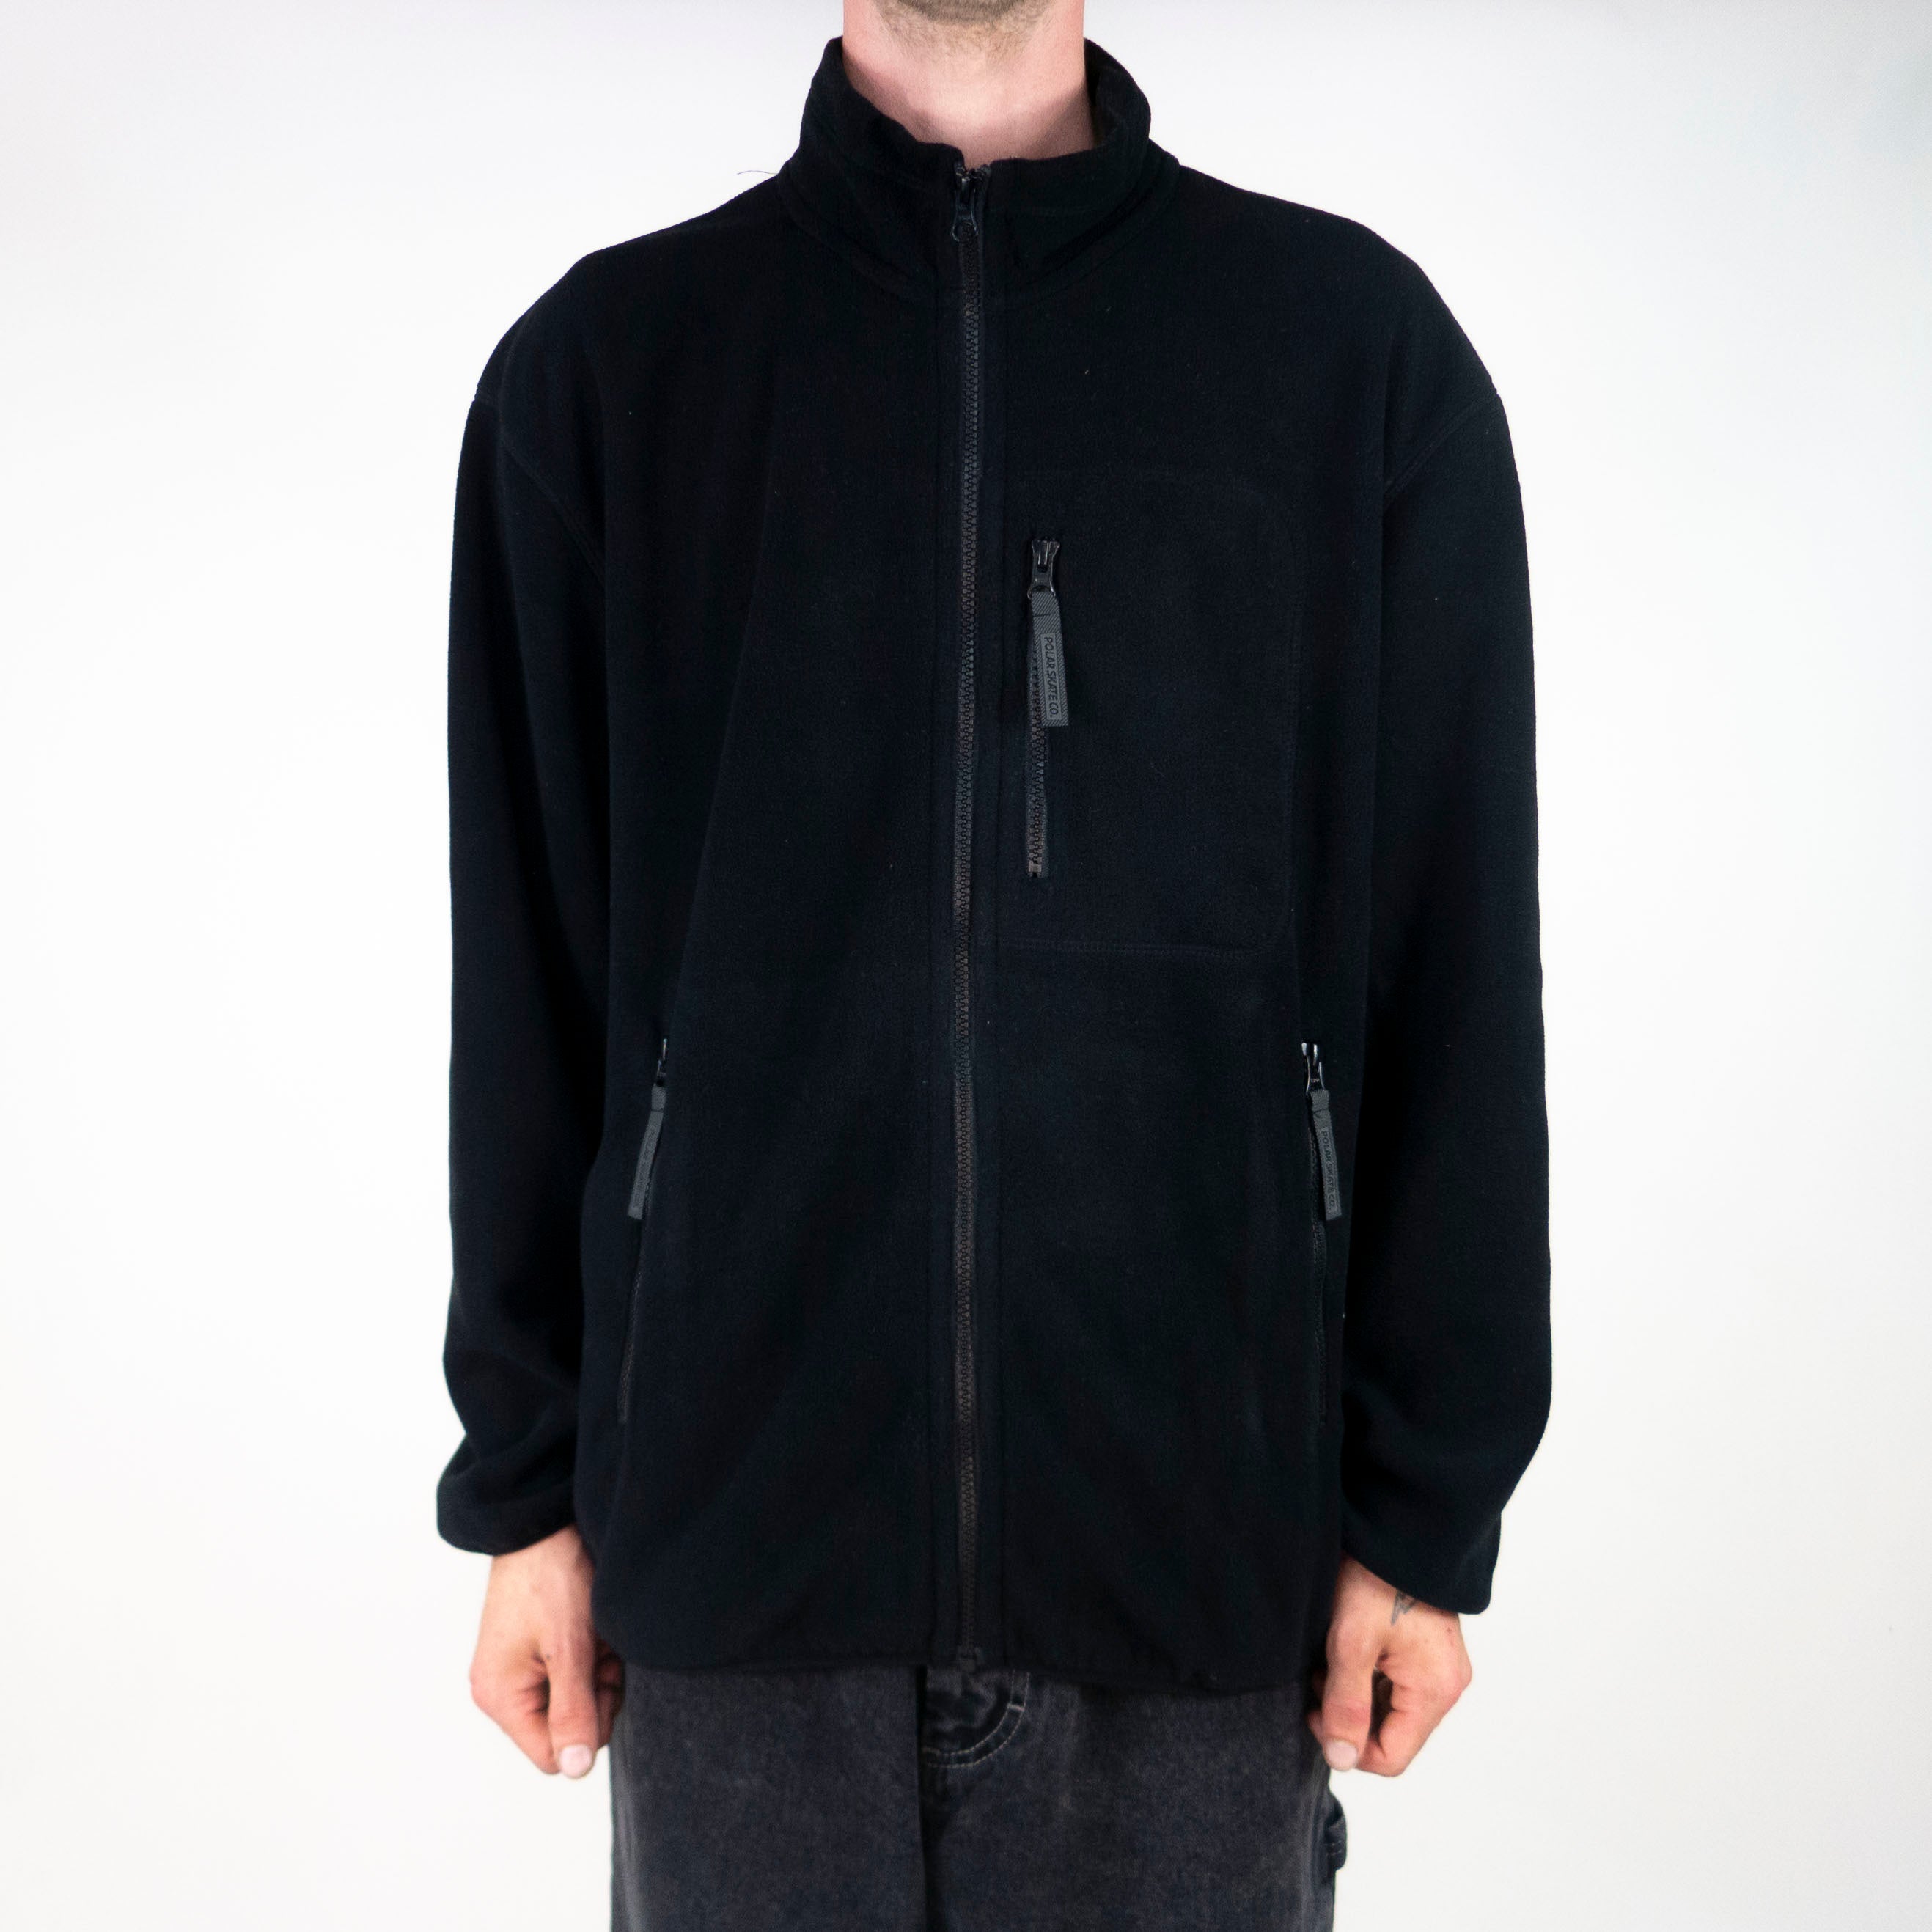 Polar Skate Co. Basic Fleece Jacket - Black exclusive at Remix